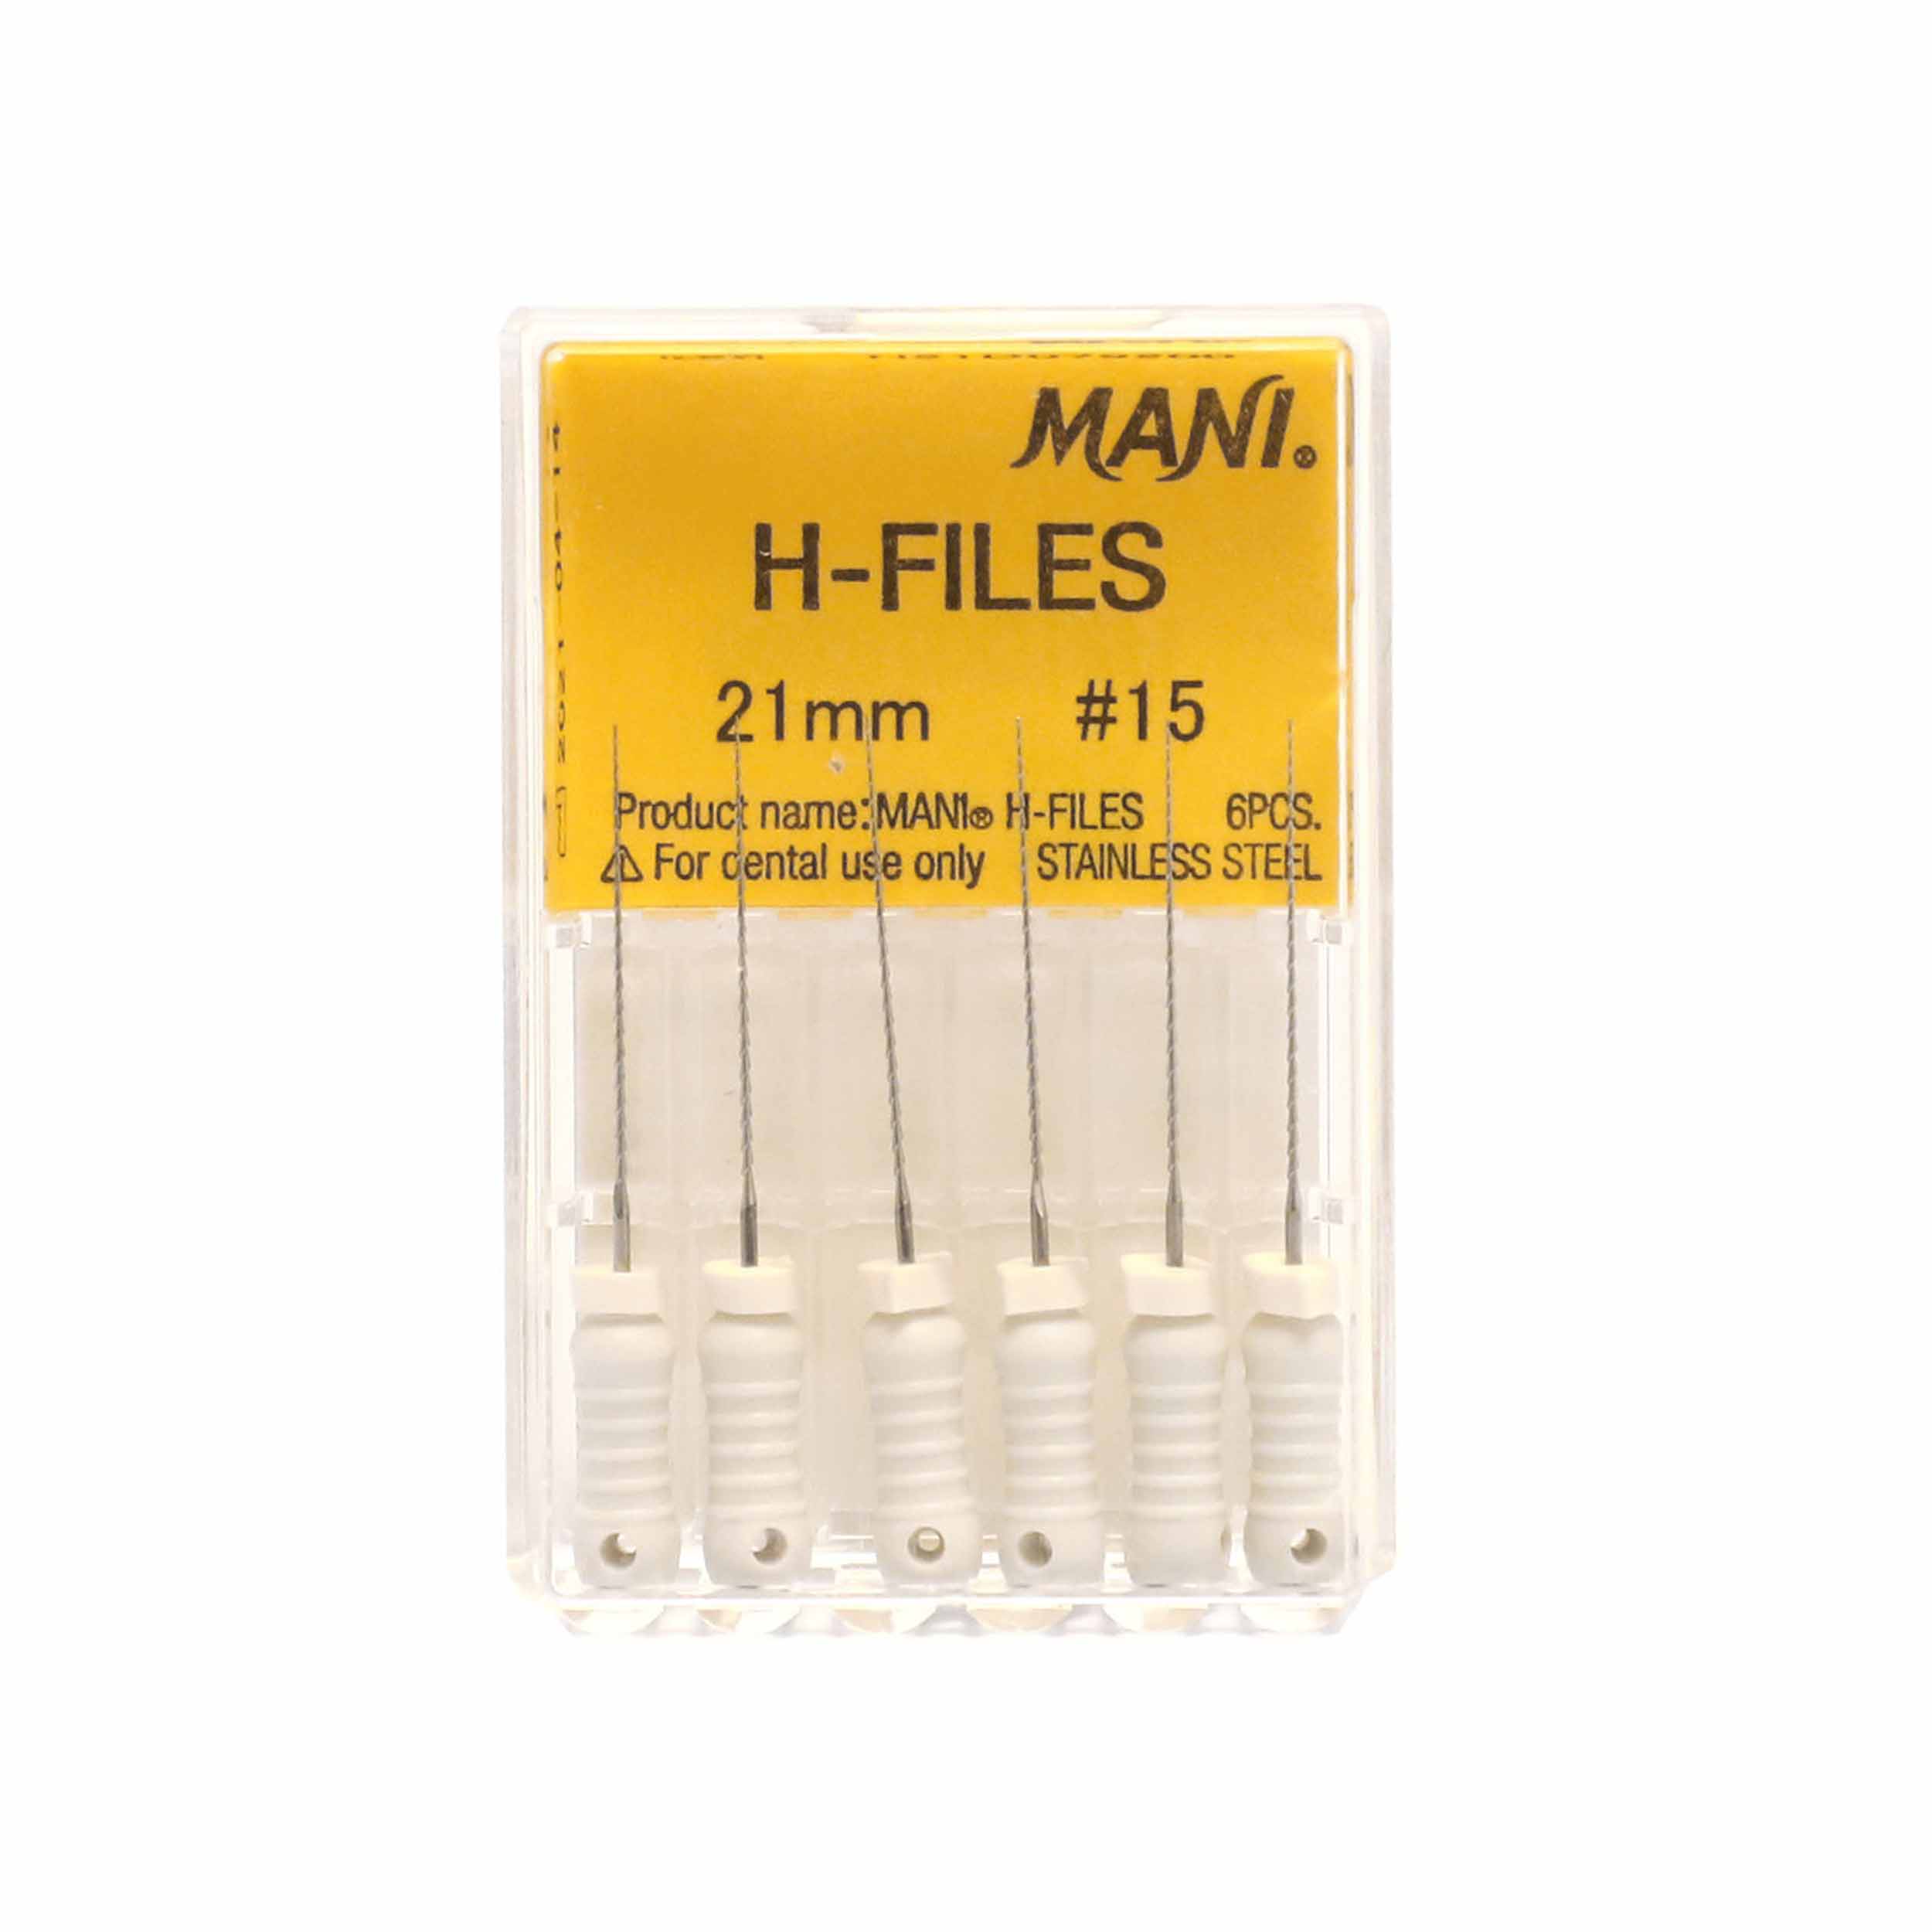 Mani H Files 21mm #15